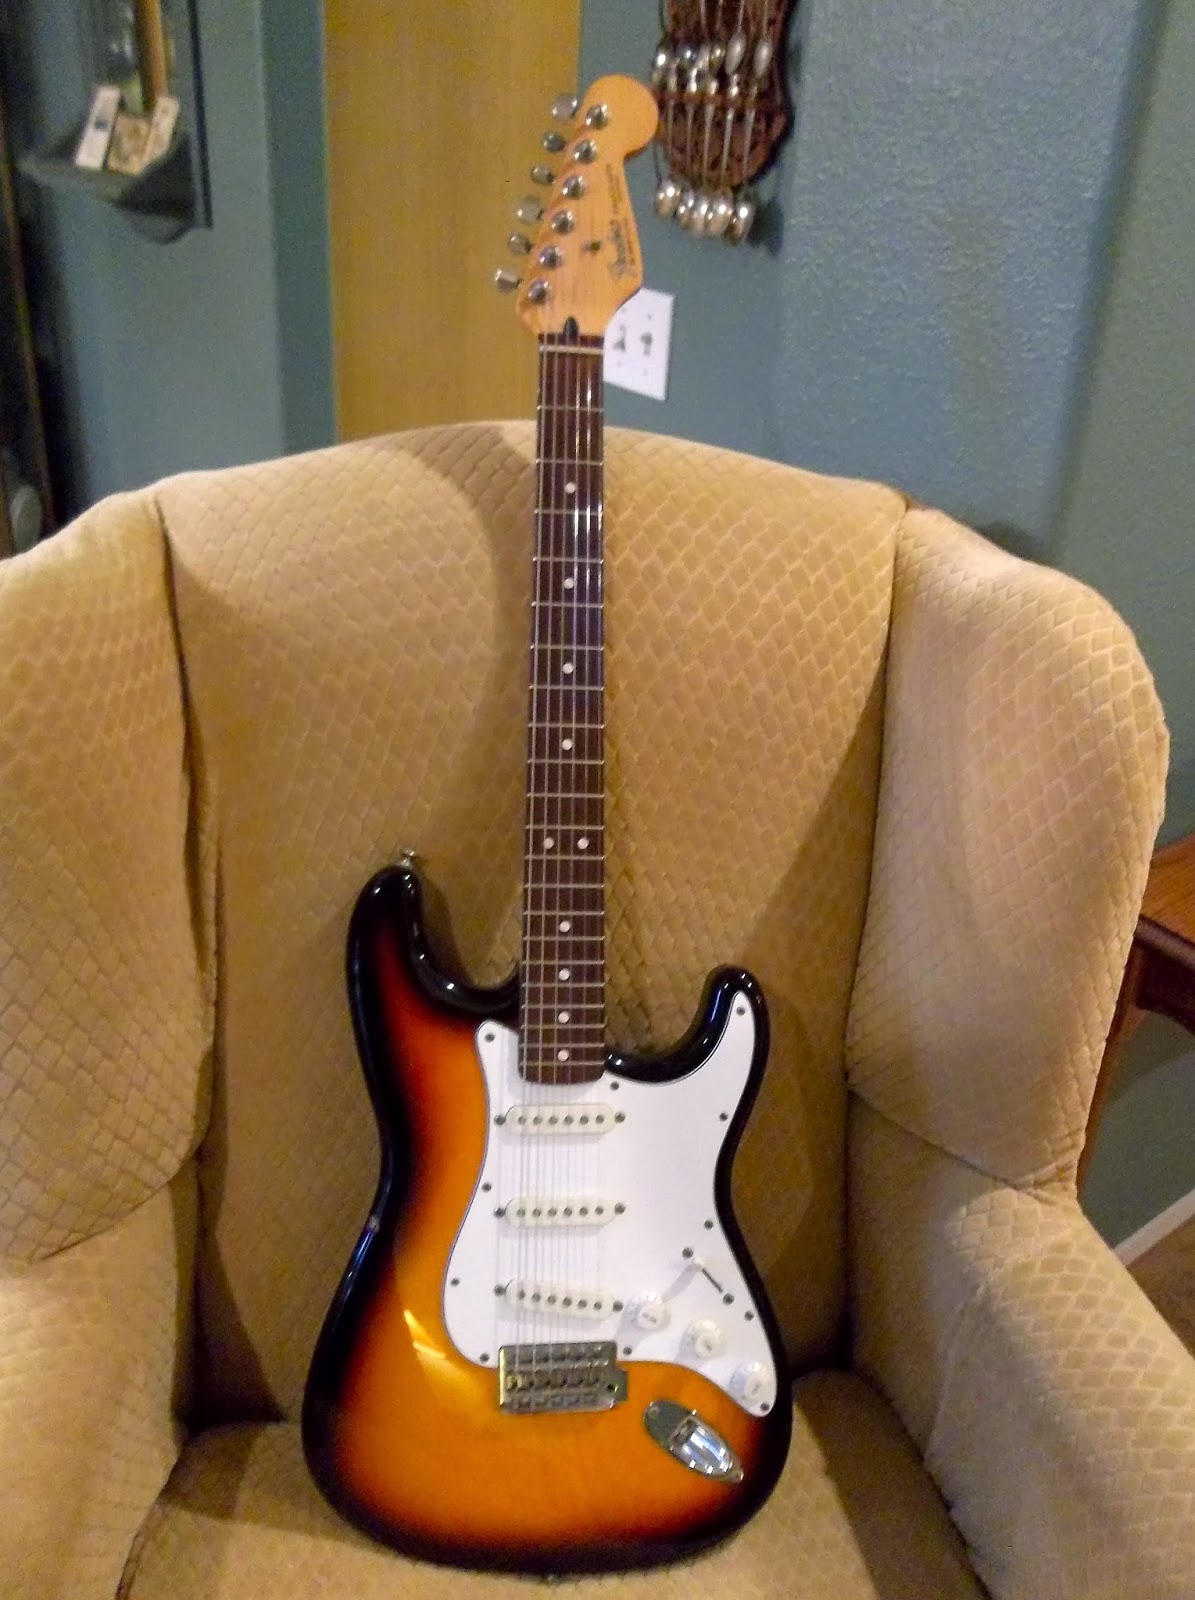 Blue Strat Modding An Mim Fender Stratocaster Into Srv Look Alike